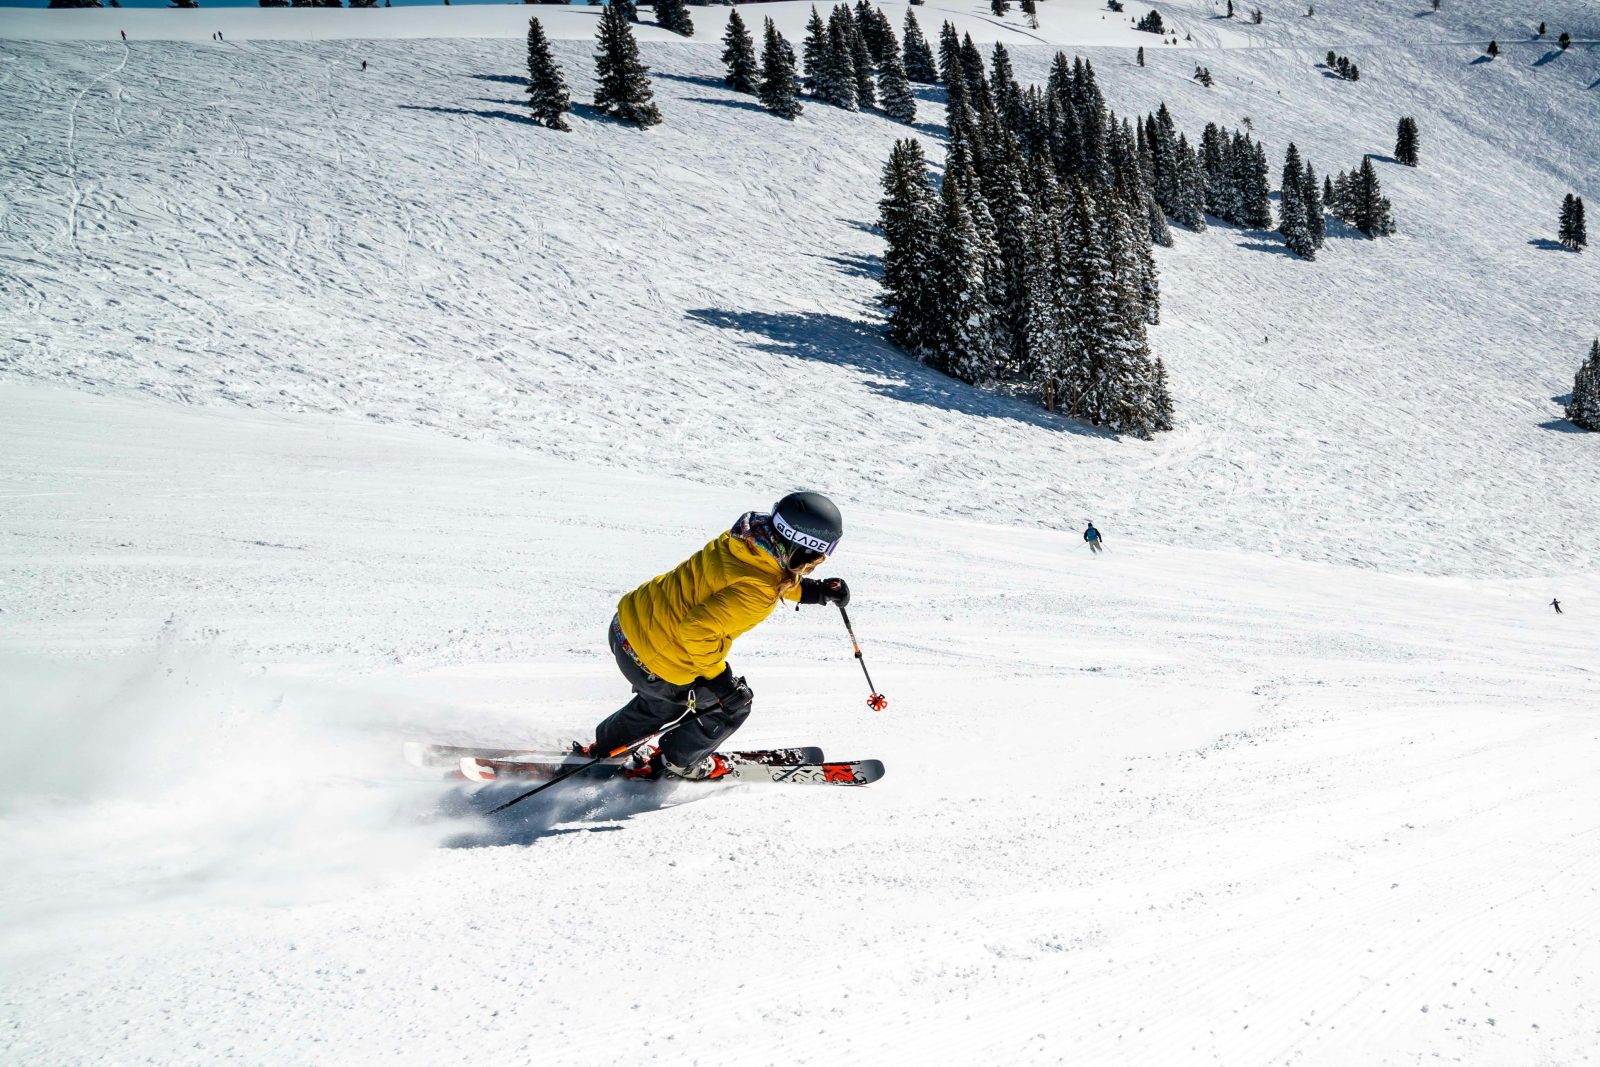 Short Ski Breaks: 10 Best Ski Resorts in Europe for a Weekend Ski Trip